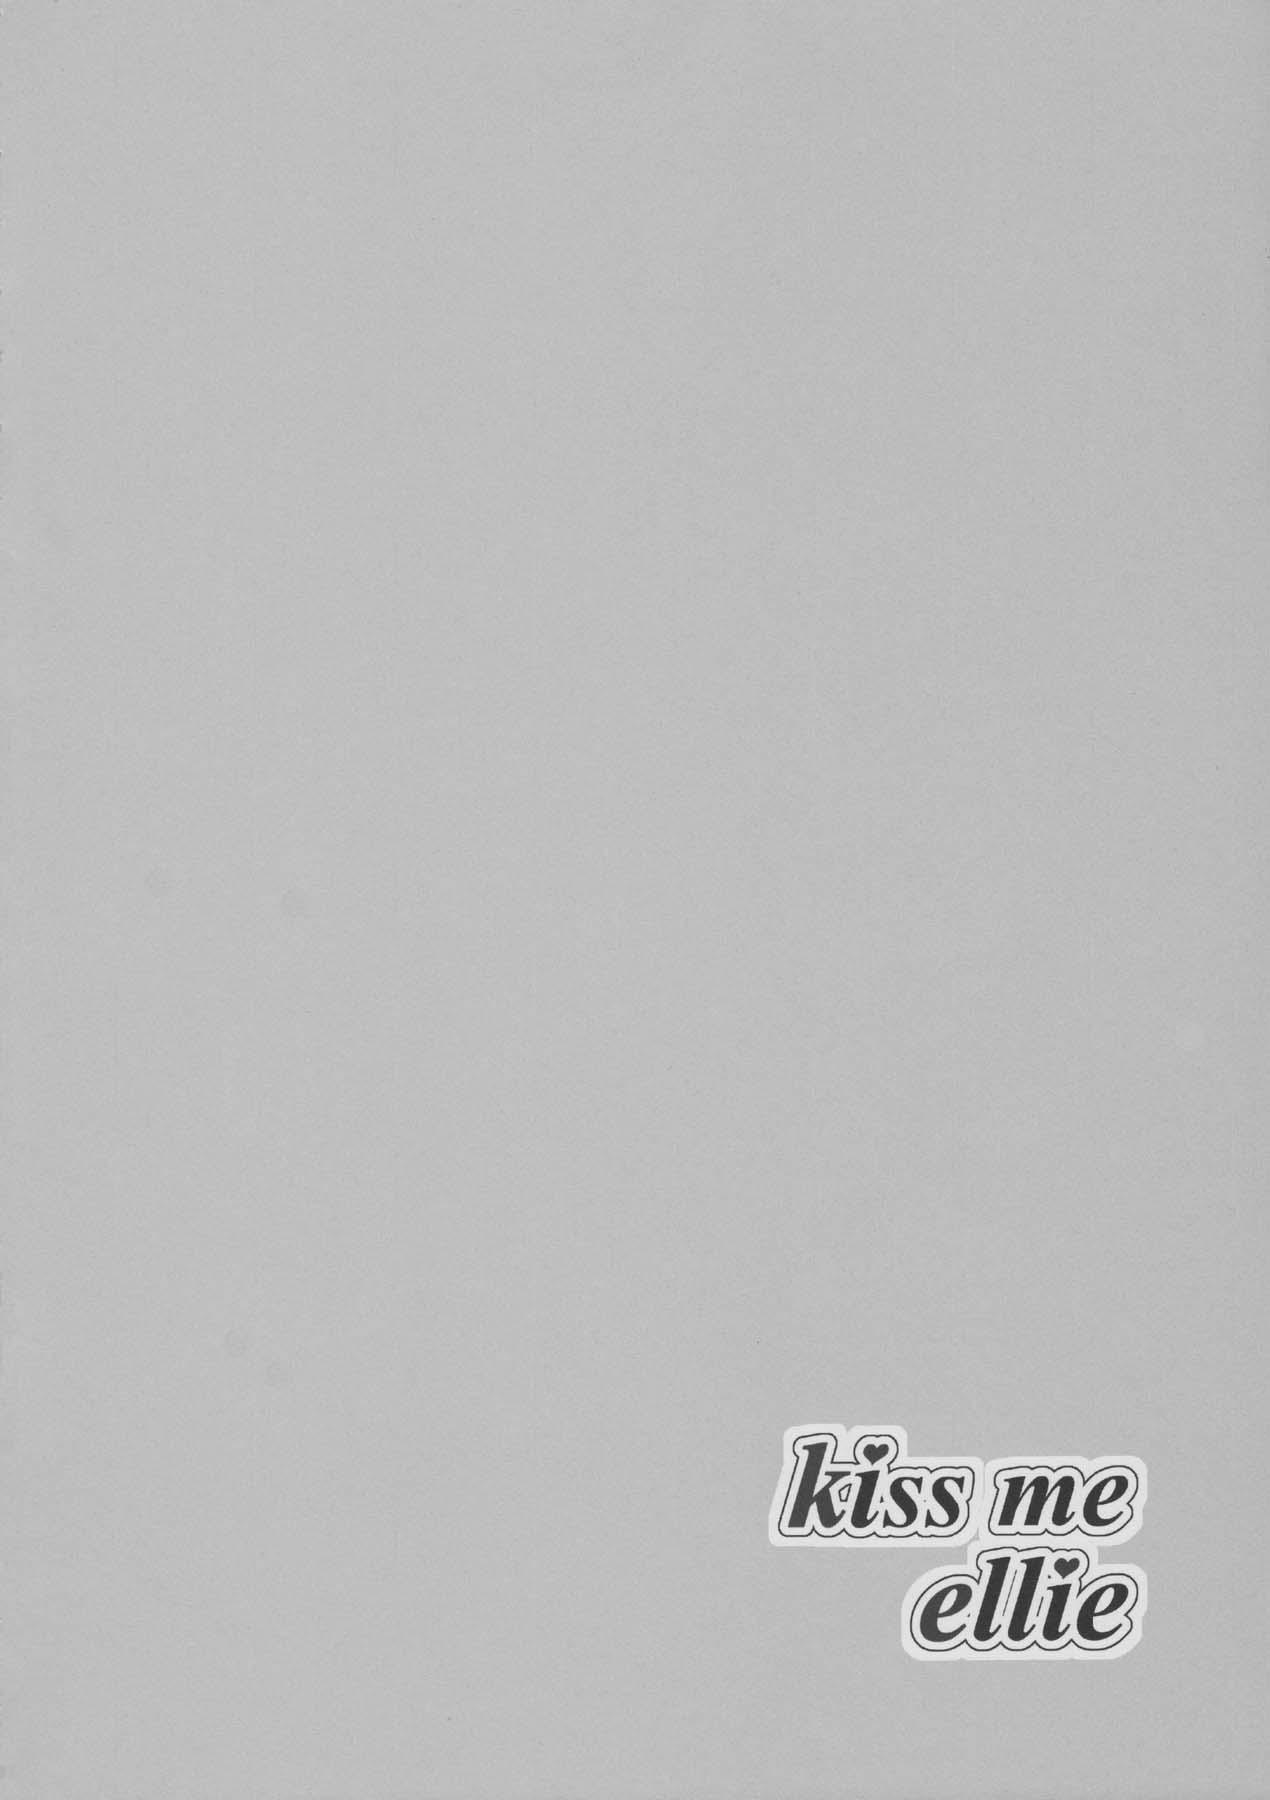 kiss me ellie 2